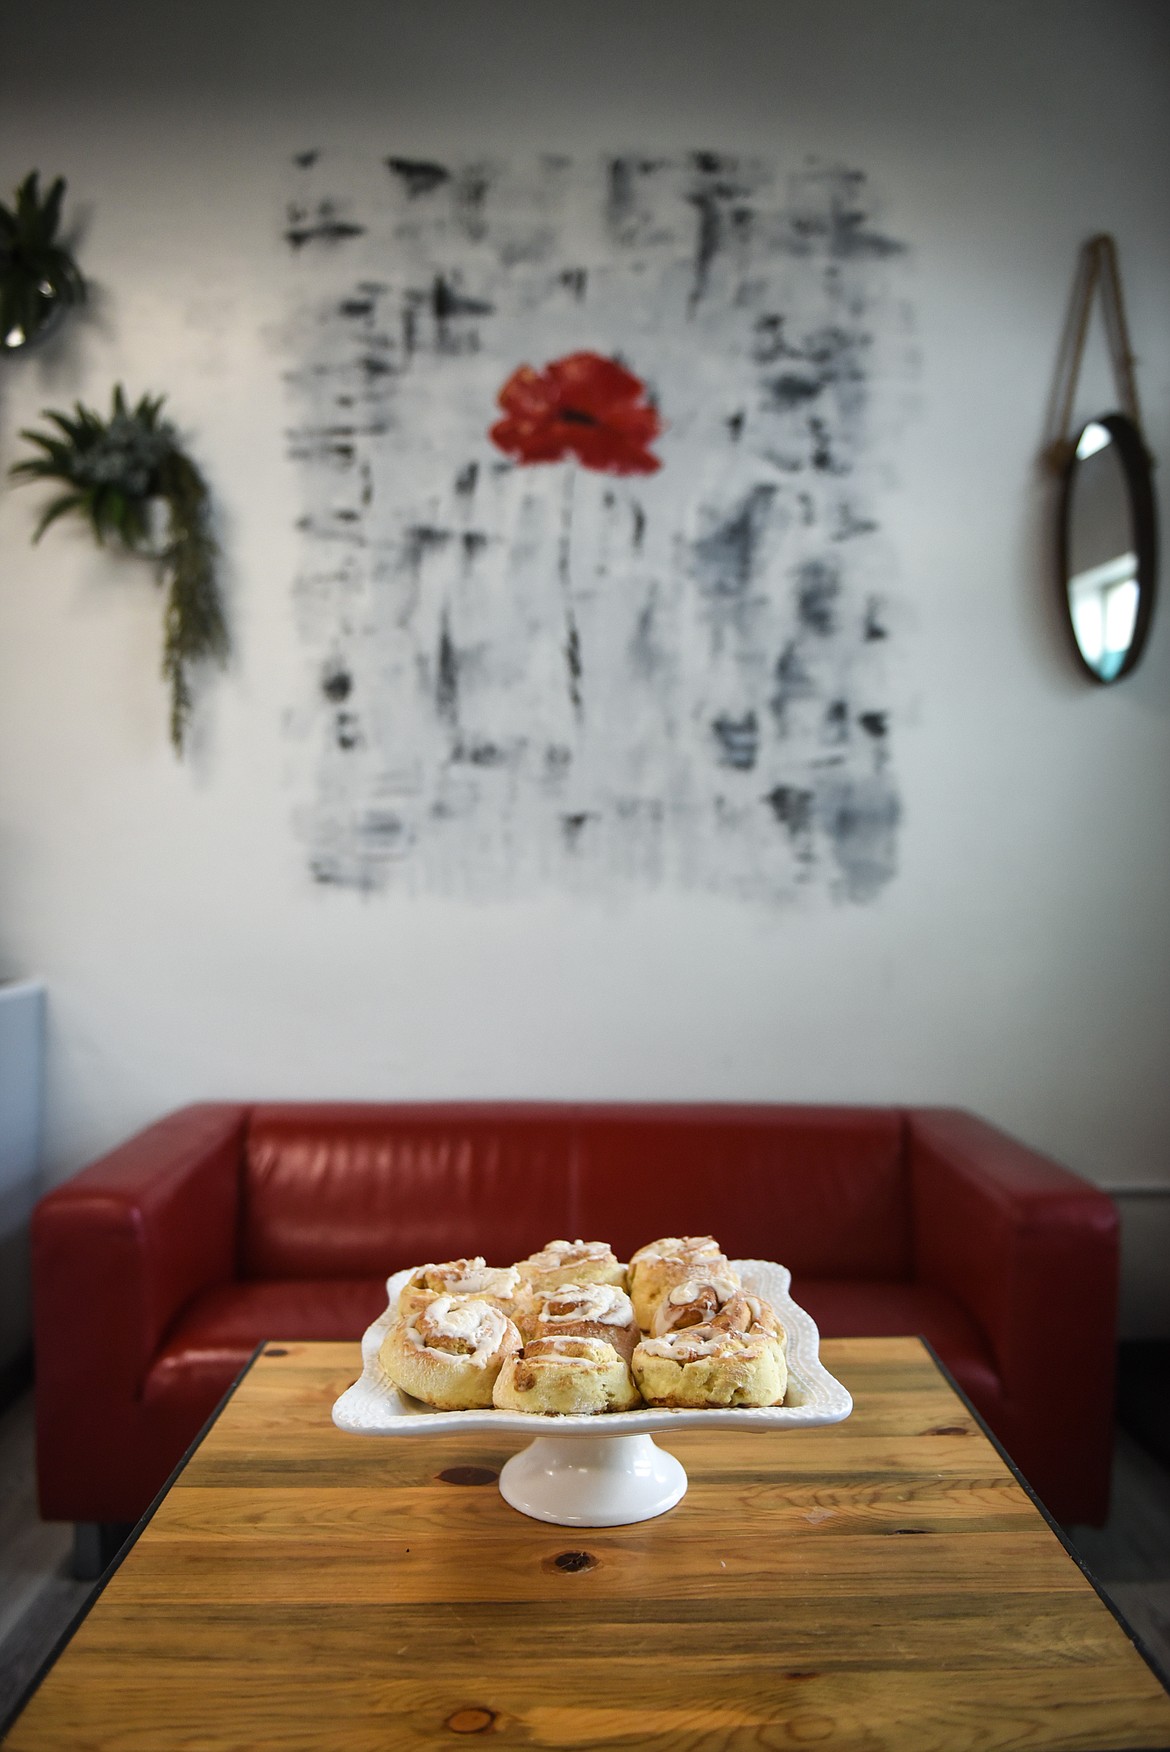 Cinnamon rolls at Red Poppy Gluten Free Bakery in Kalispell on Tuesday, Dec. 8. (Casey Kreider/Daily Inter Lake)